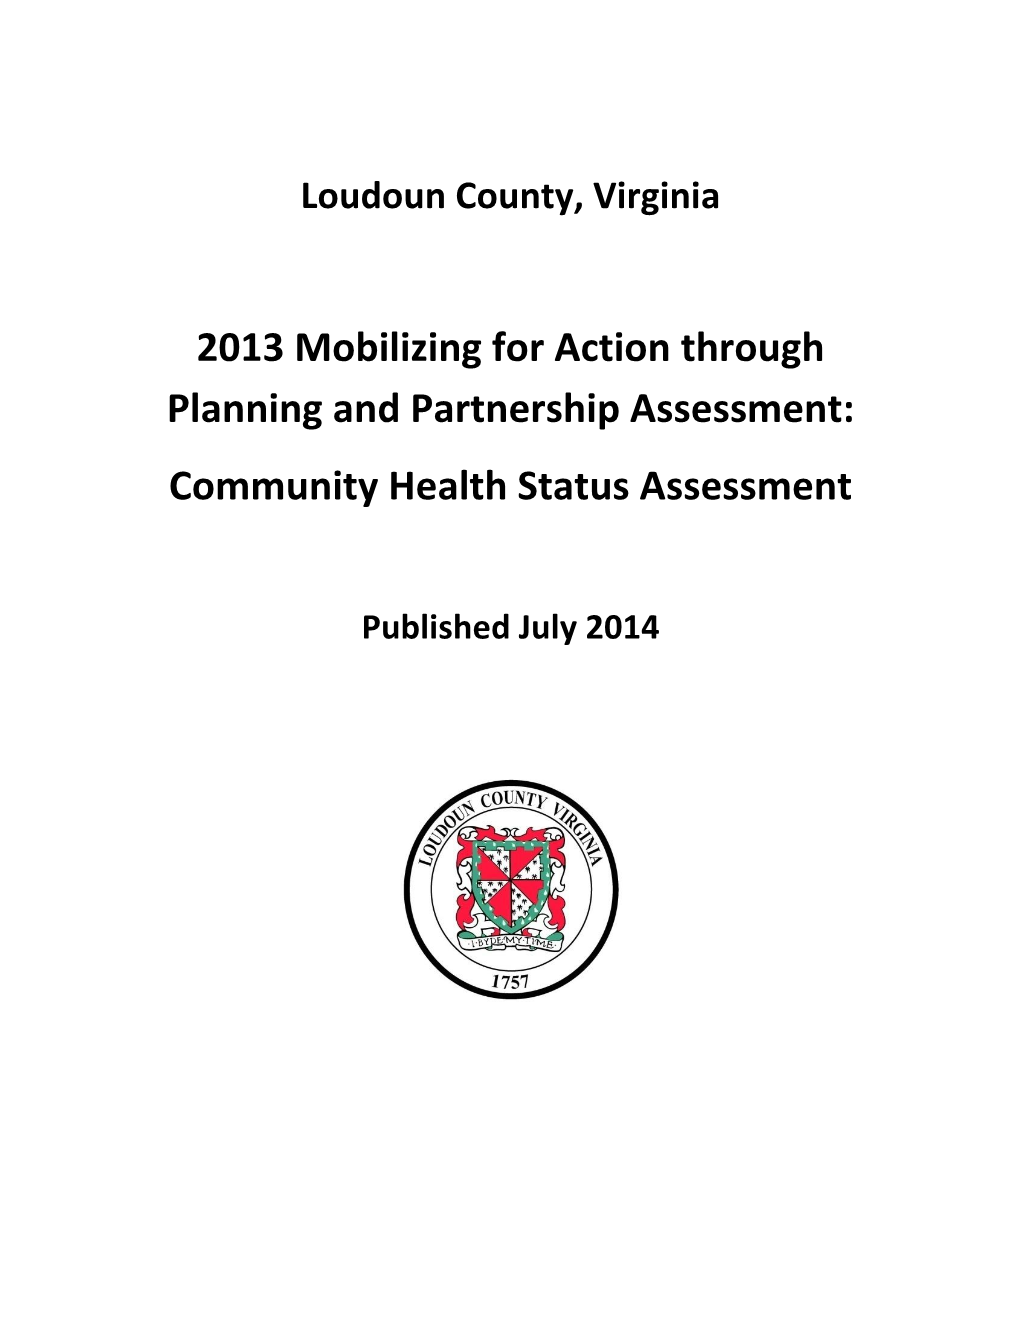 Community Health Status Assessment